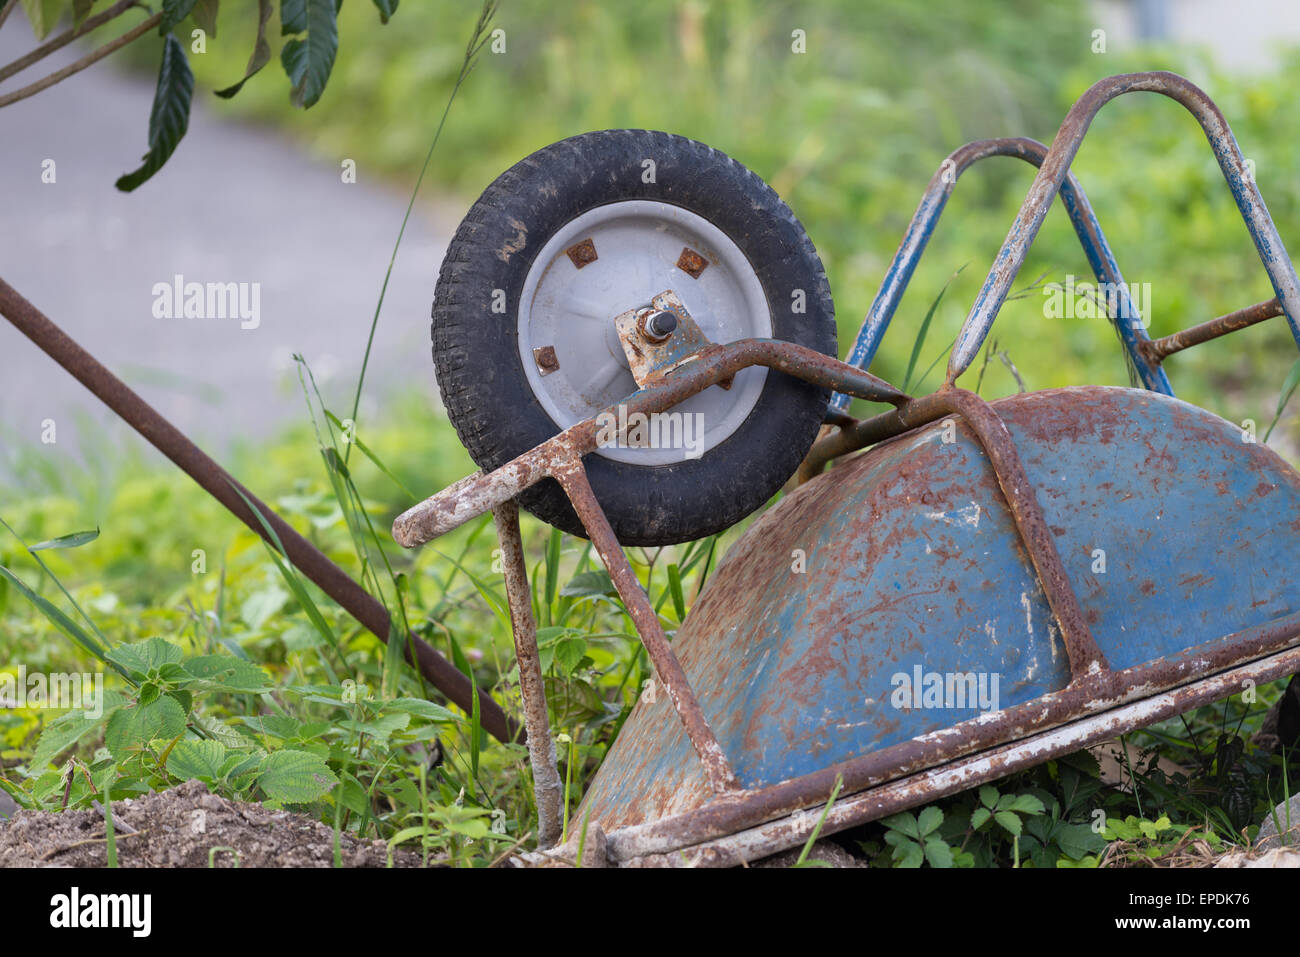 An old rusty blue wheelbarrow lying upside down in overgrown grass Stock Photo